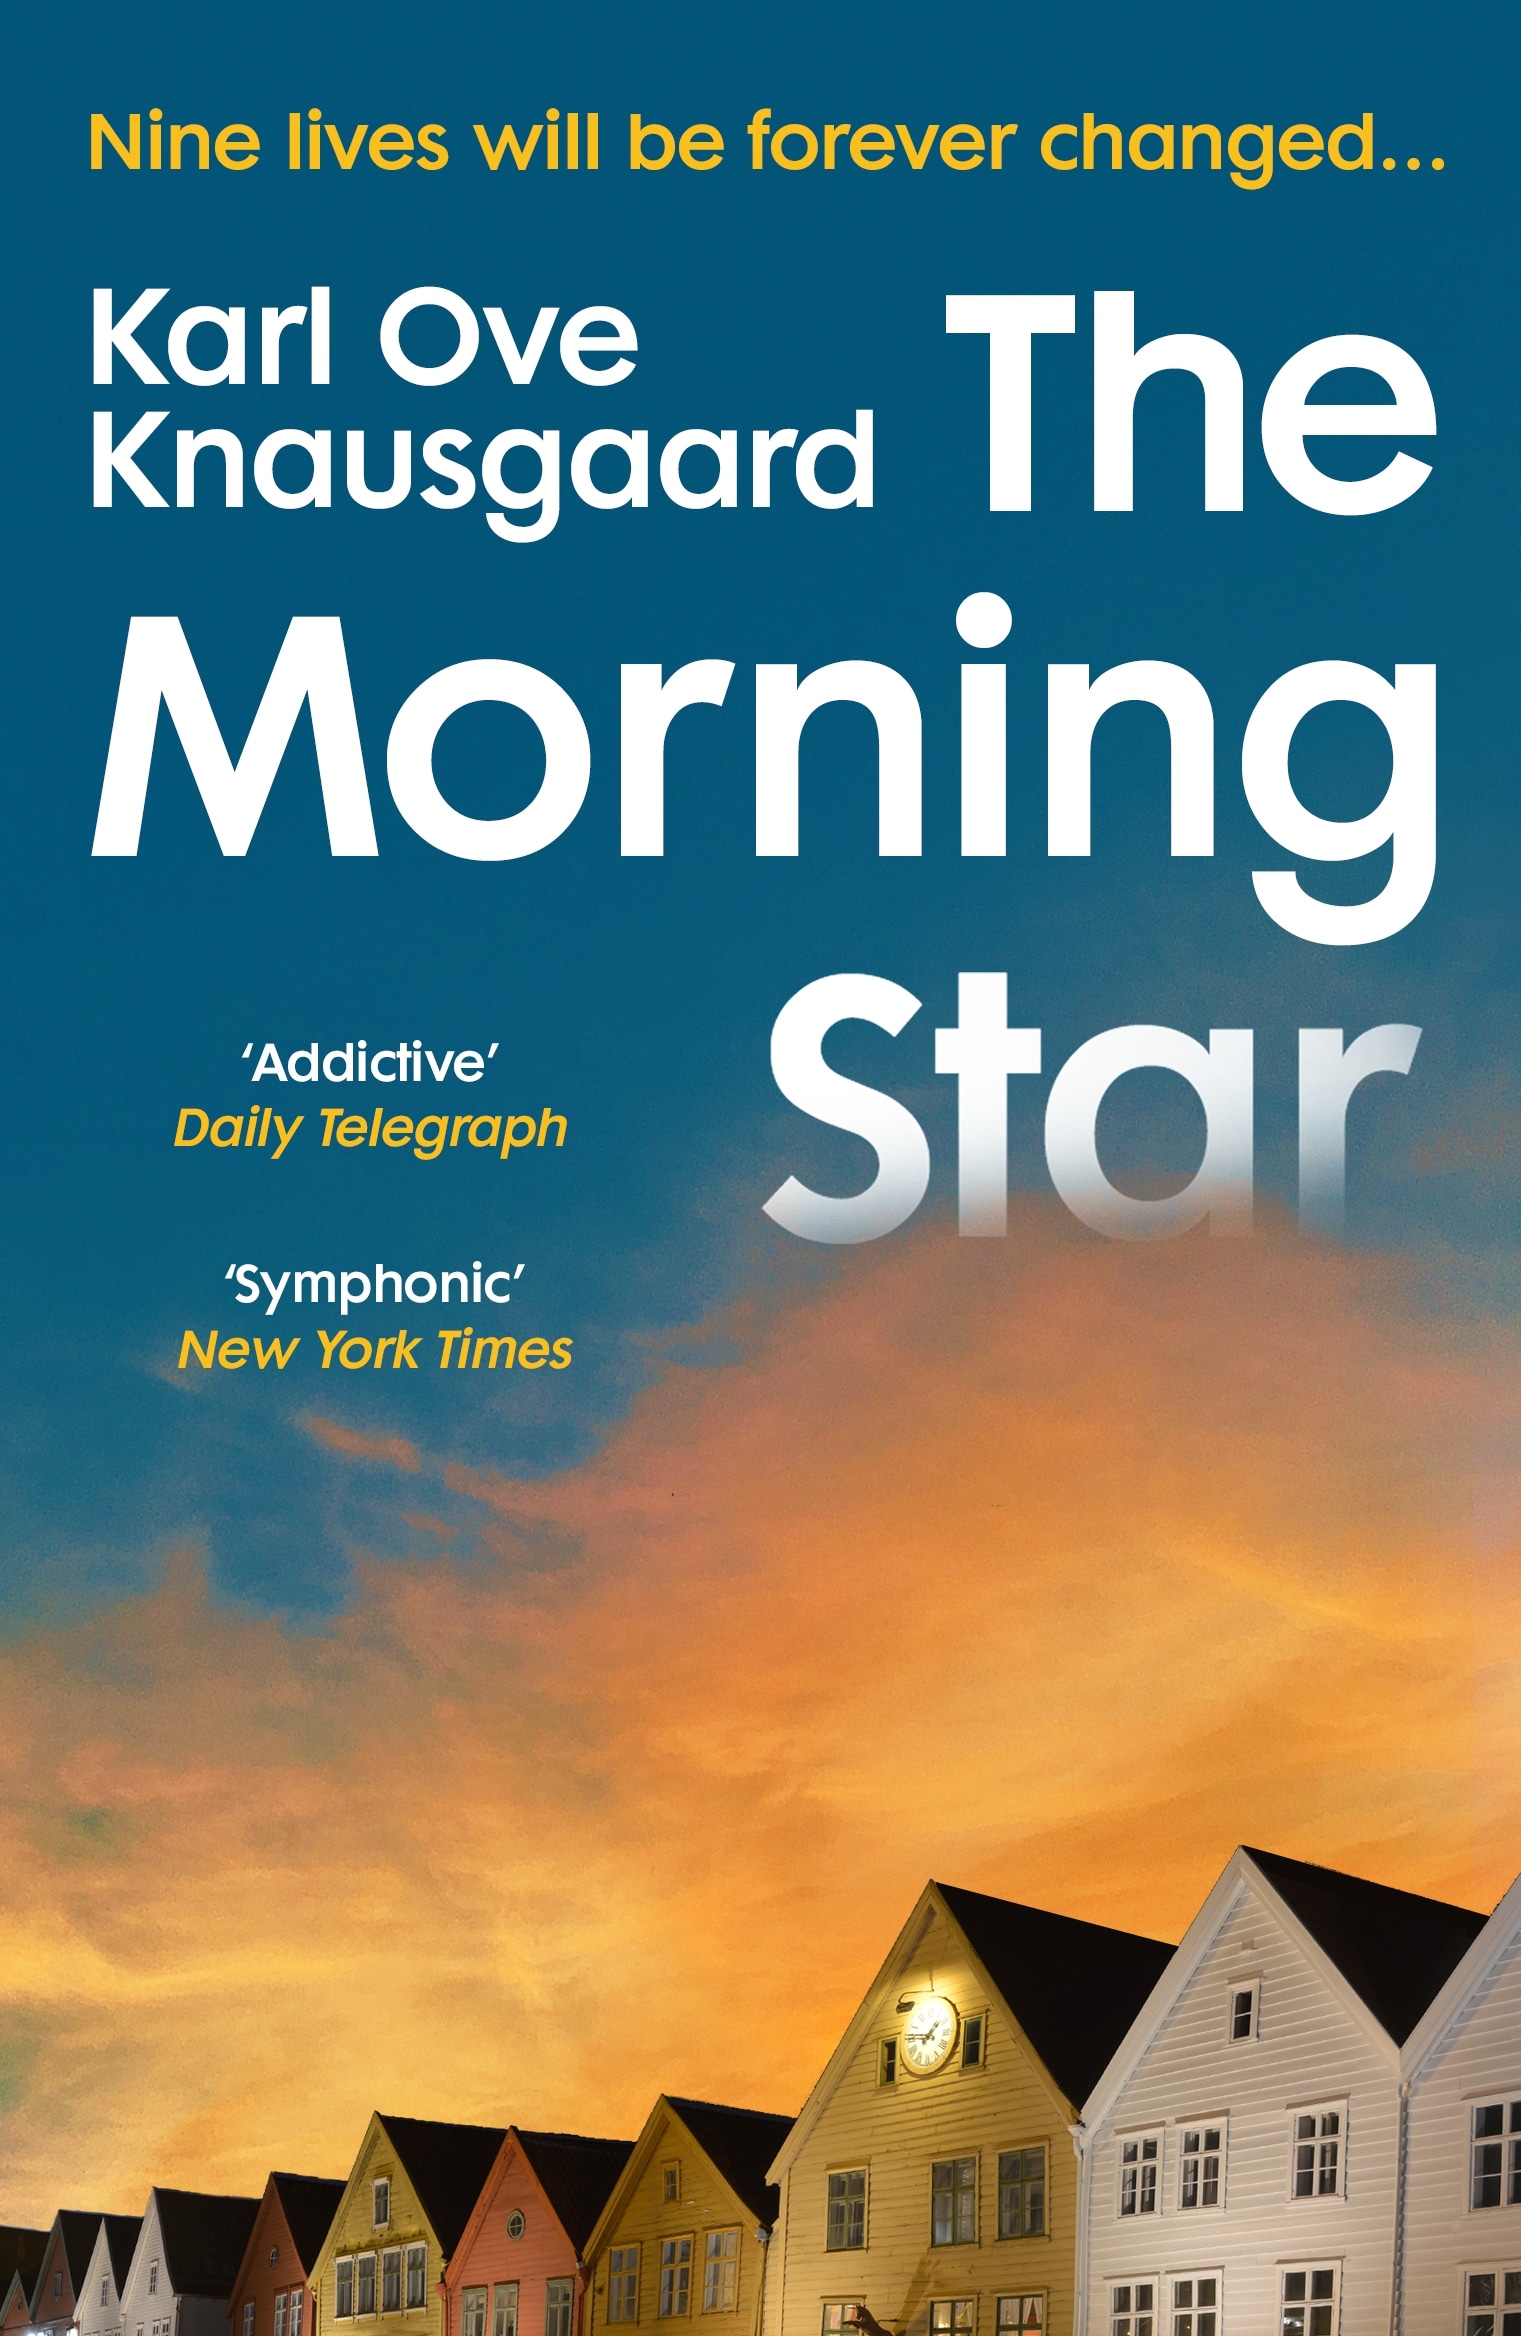 Book “The Morning Star” by Karl Ove Knausgaard — September 29, 2022